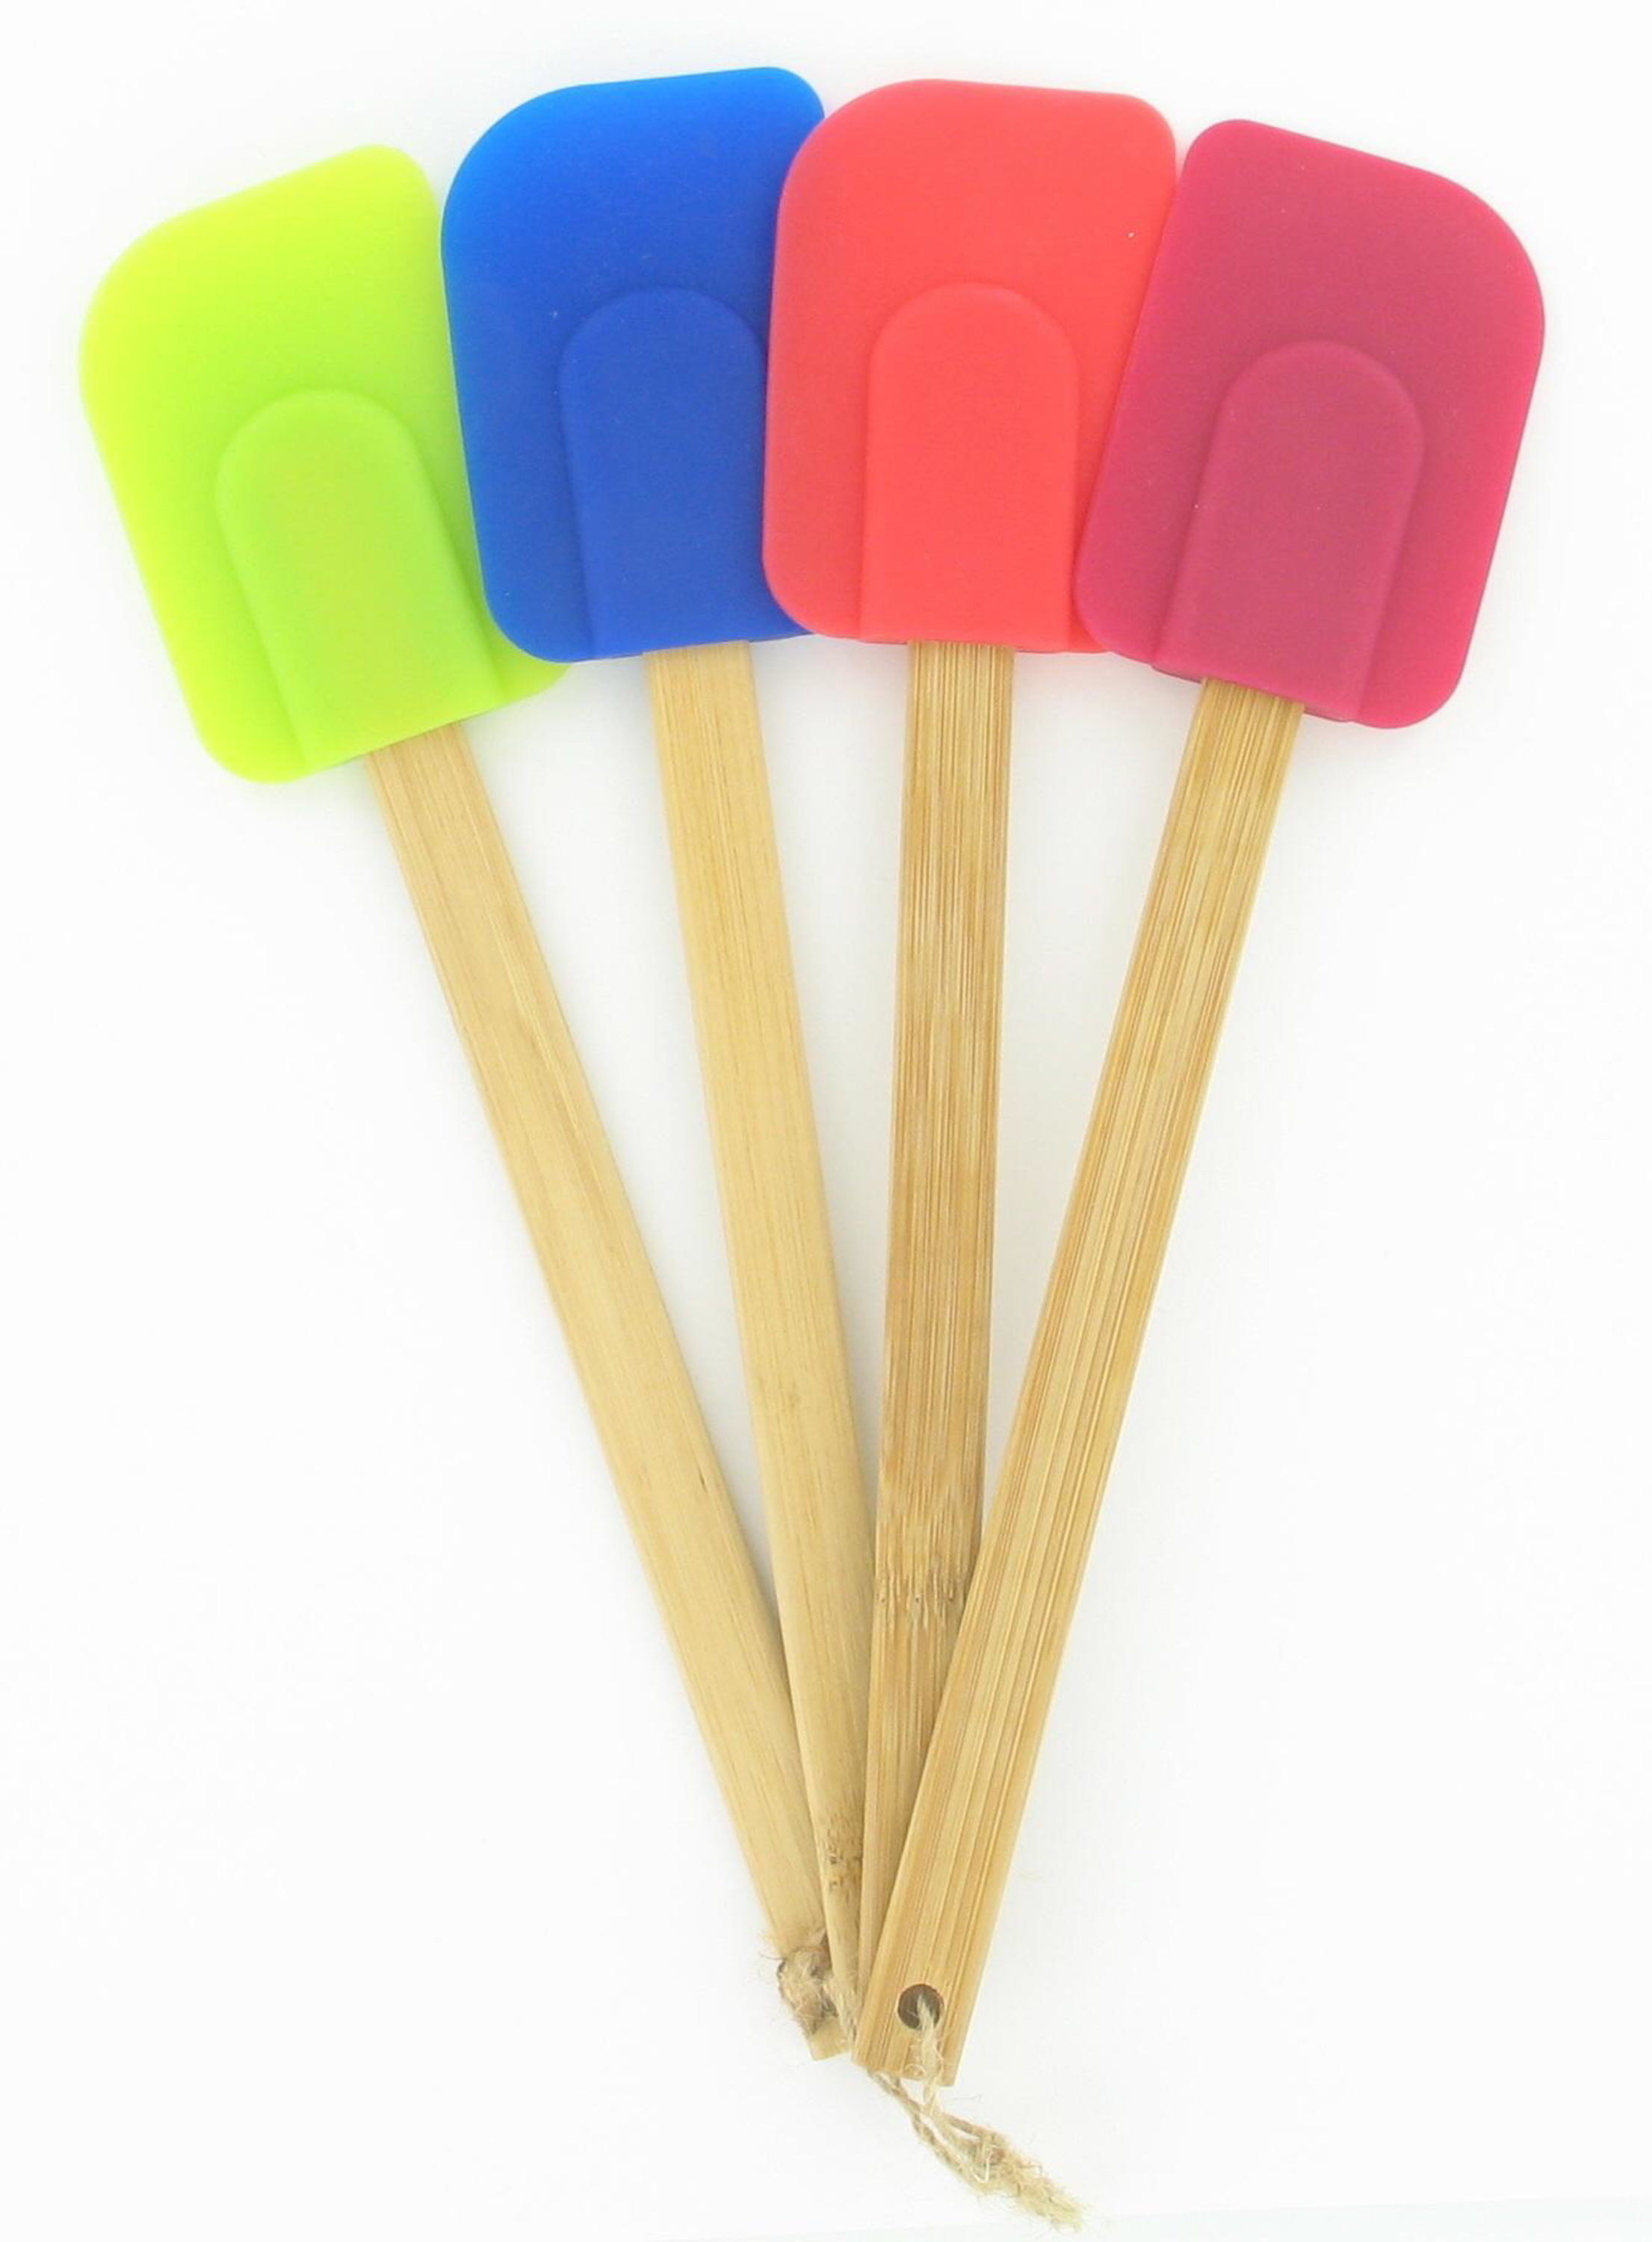 Four neon spatulas